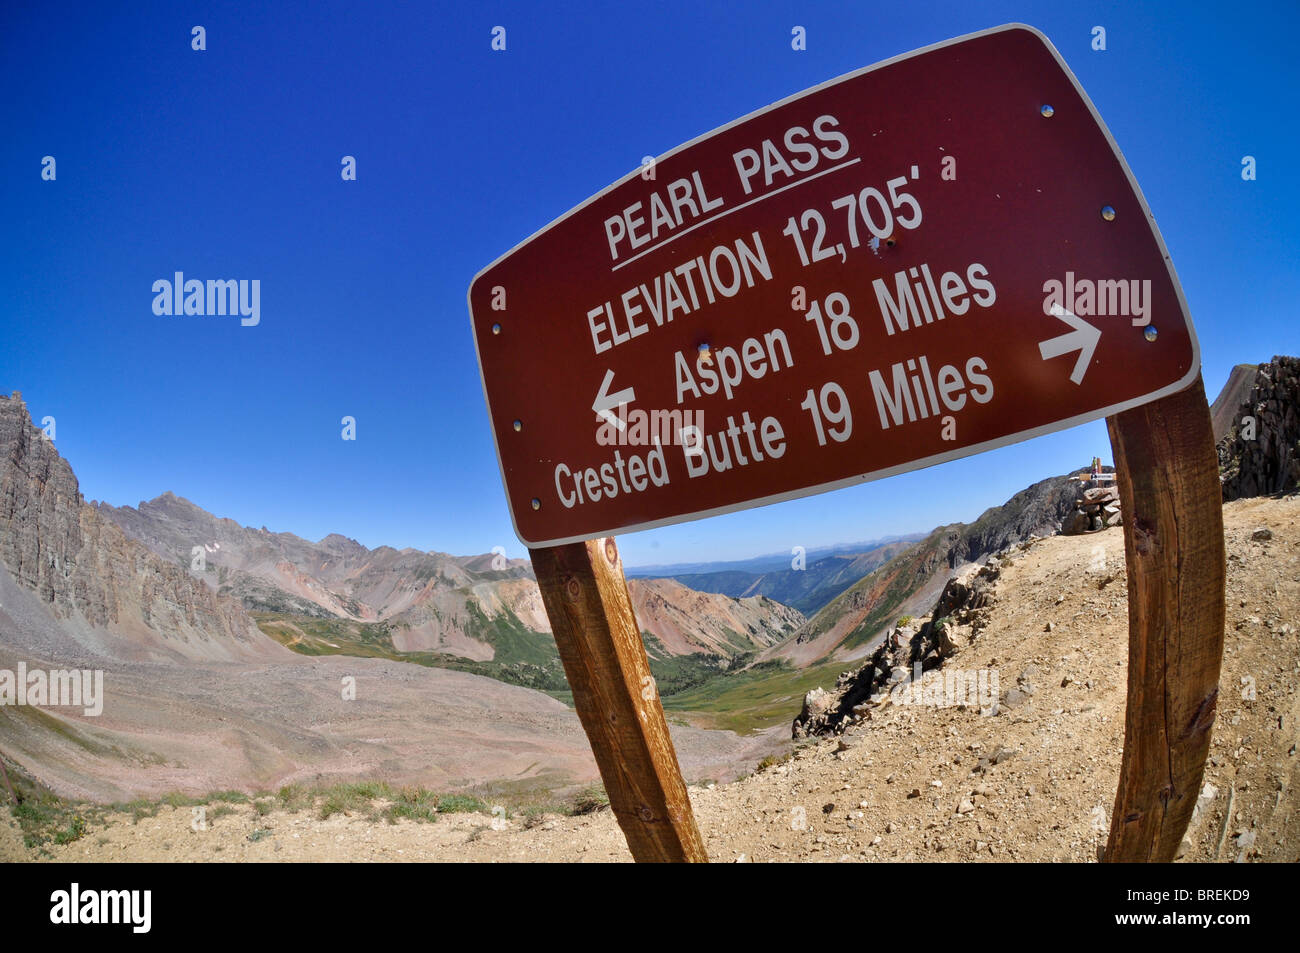 Pearl jeep trail passe signe, Crested Butte, Aspen, Colorado Banque D'Images